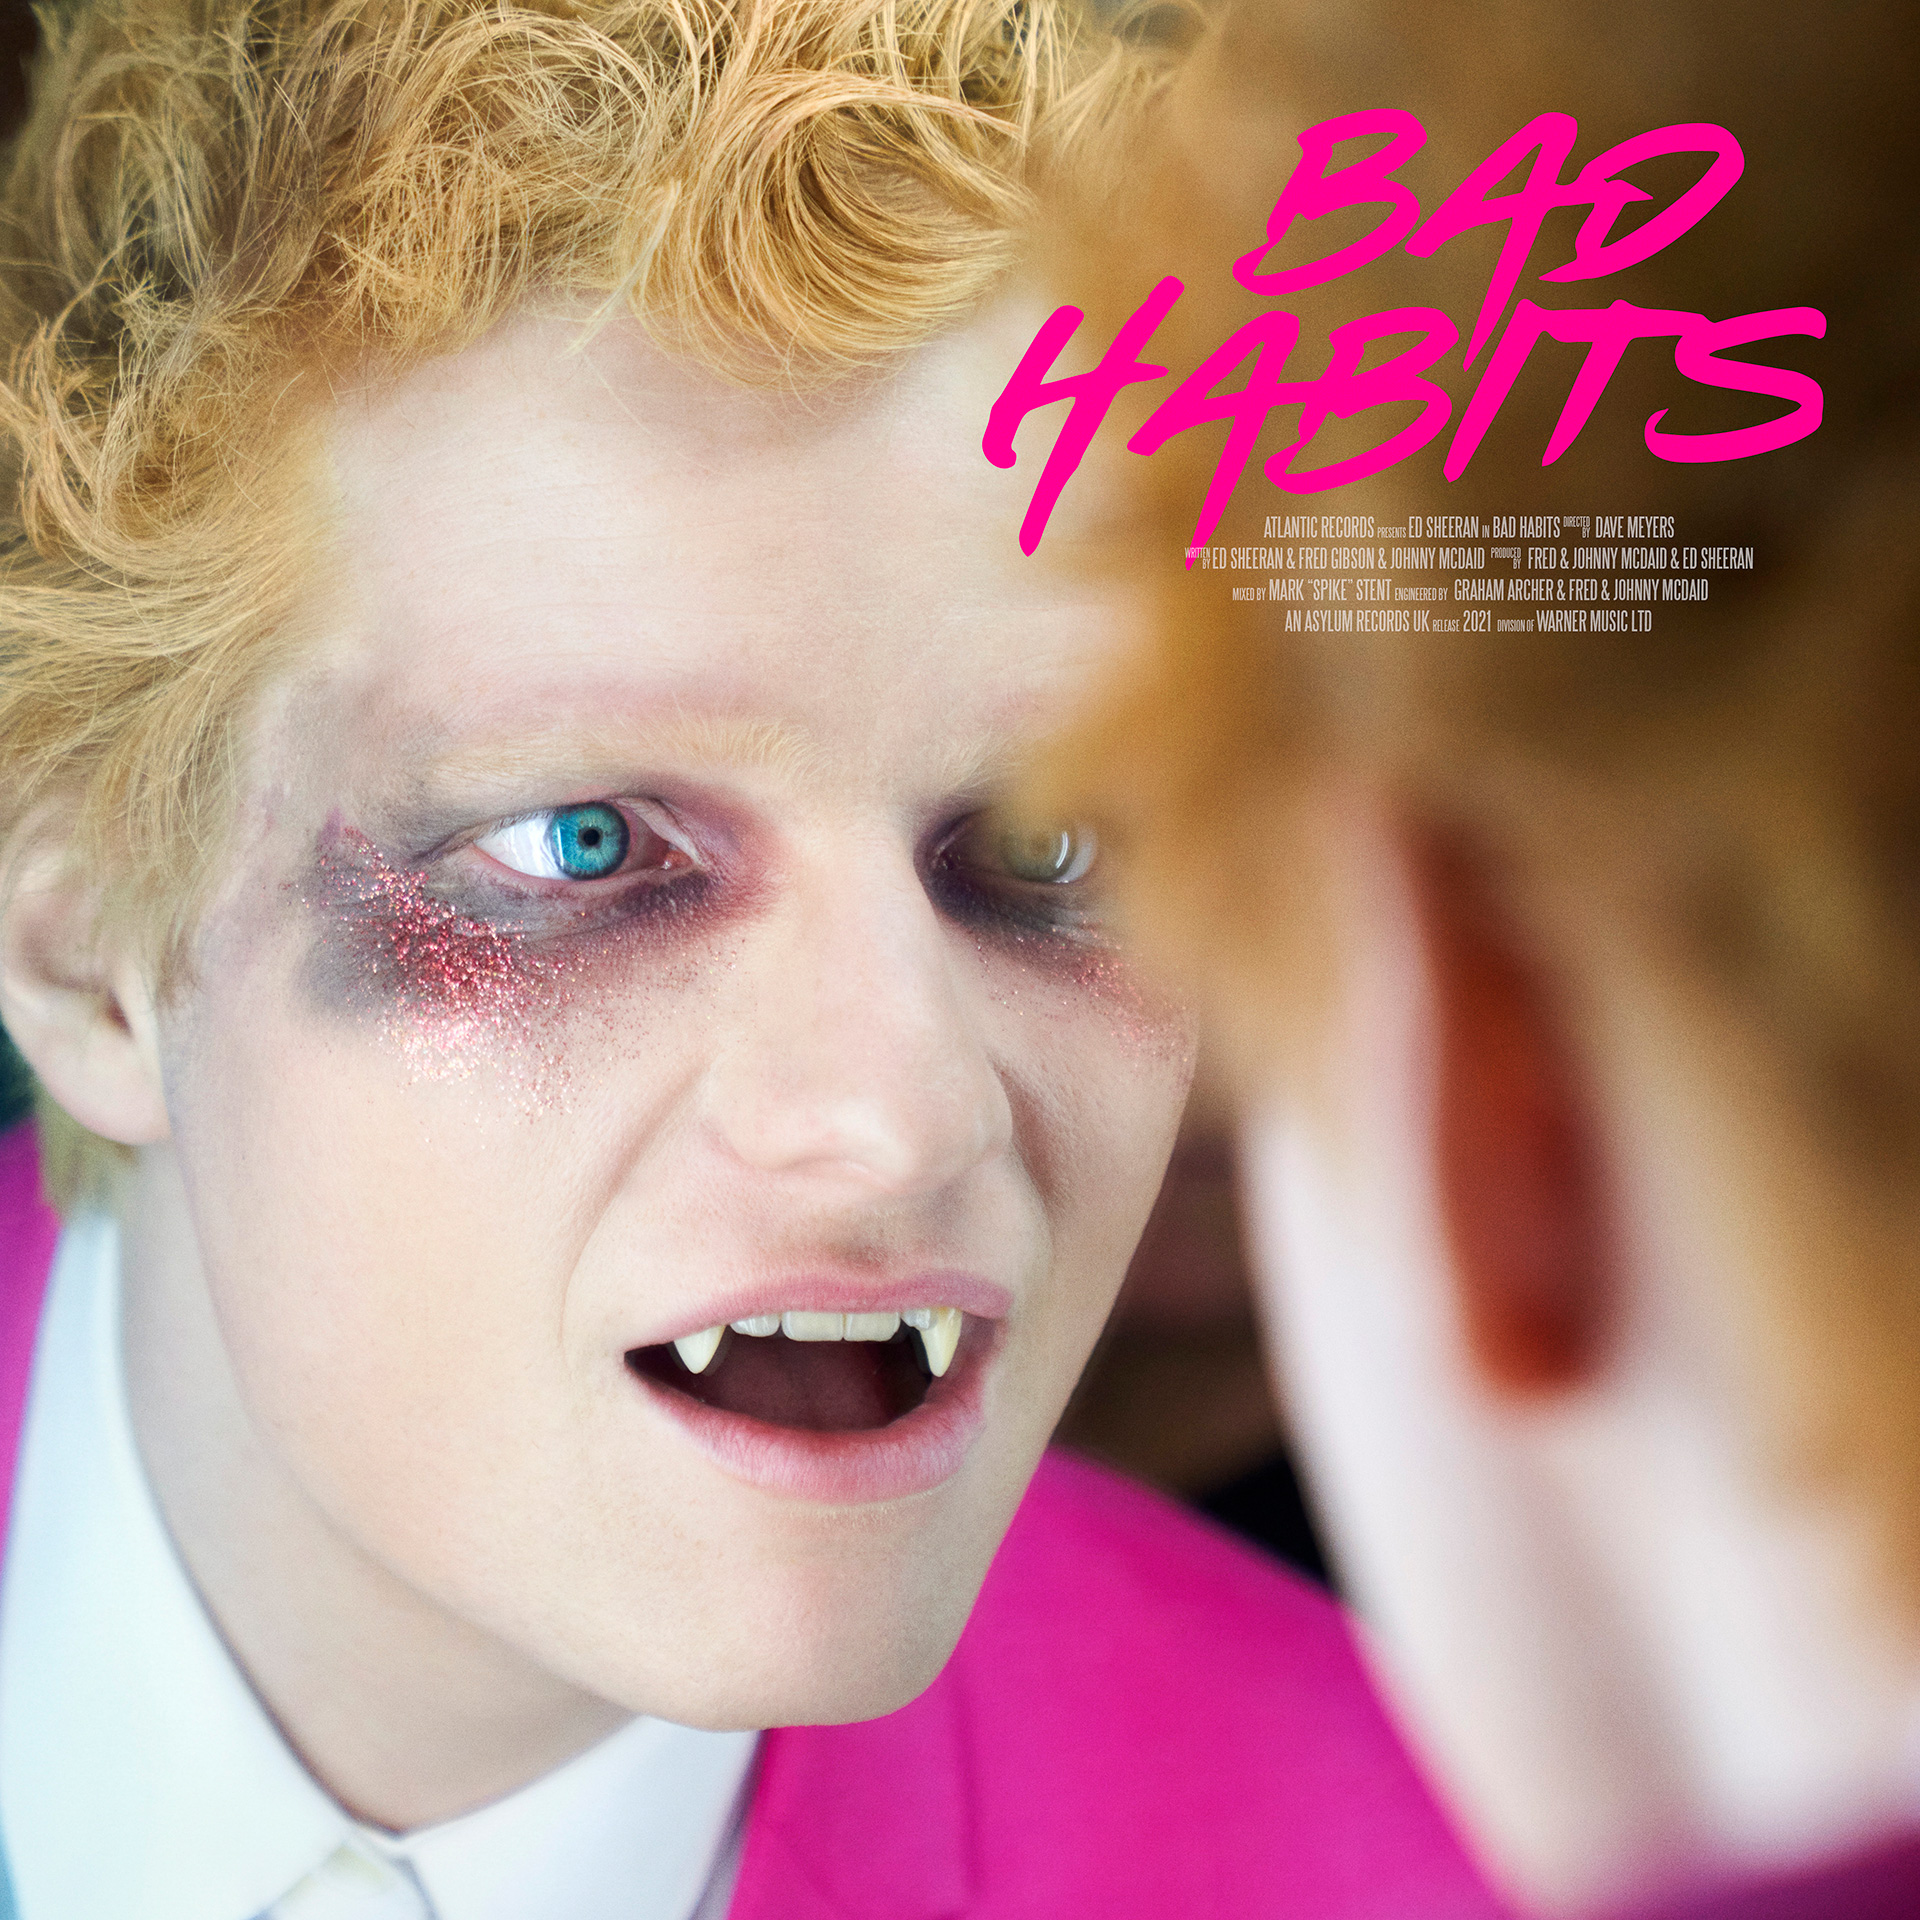 Ed releases new single Bad Habits